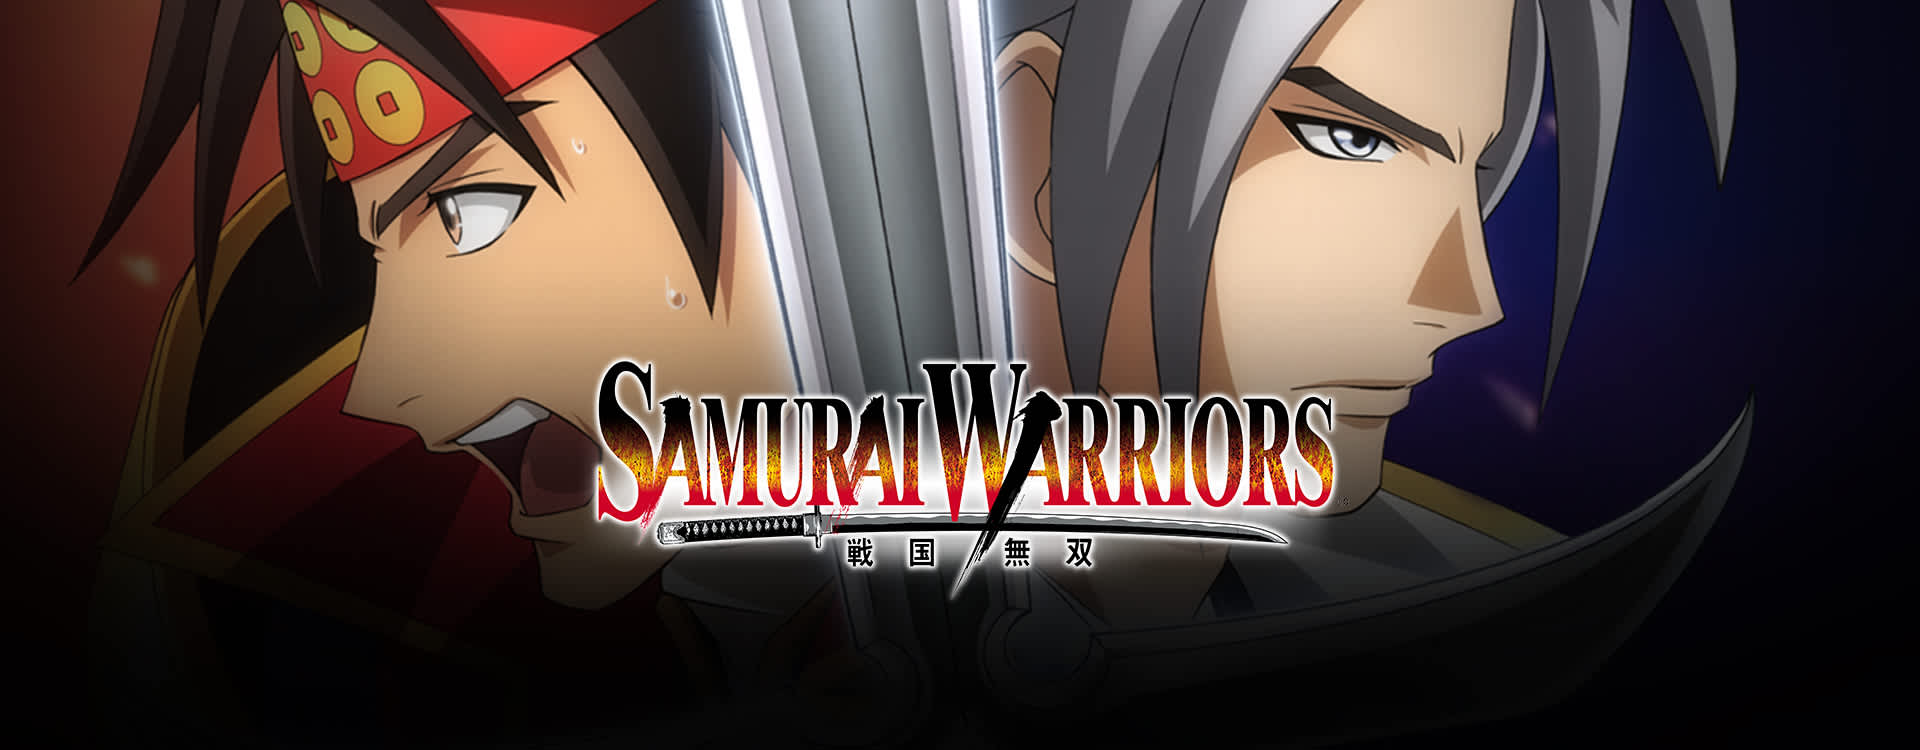 samurai warriors anime